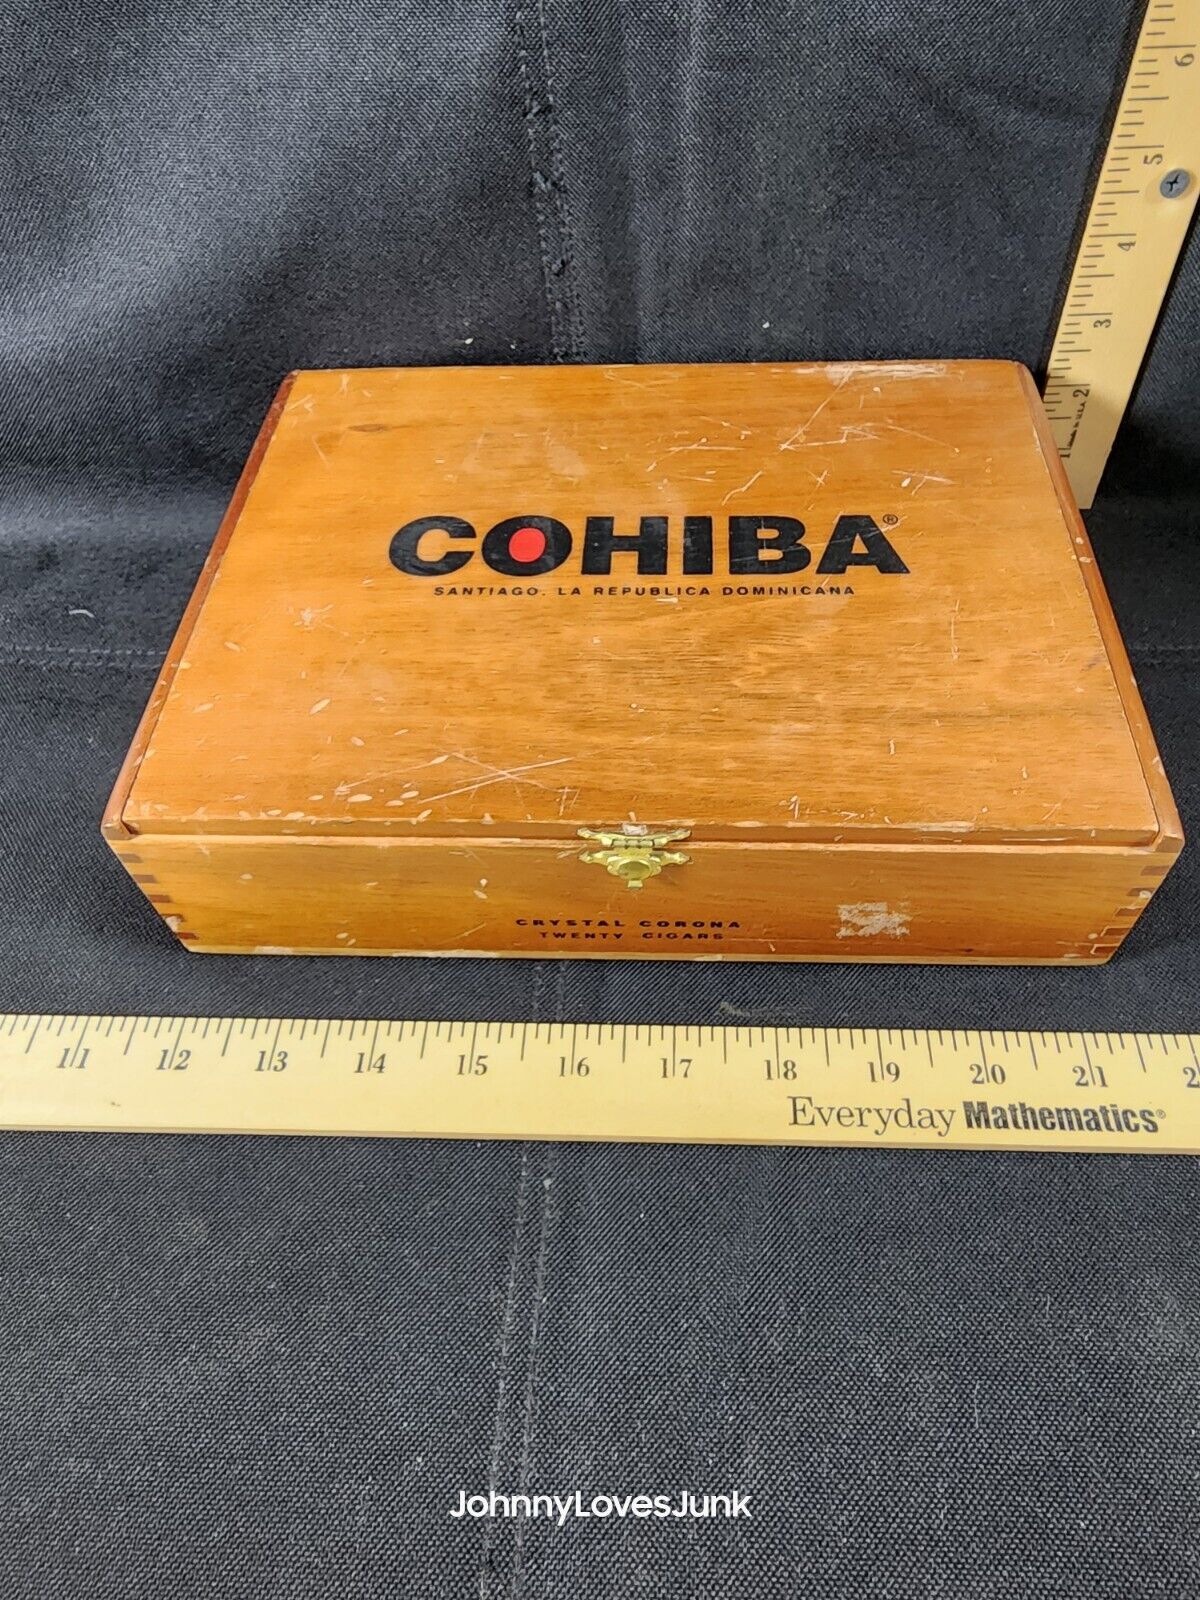 Vintage Cohiba Cigar Box Used Empty Craft Project 